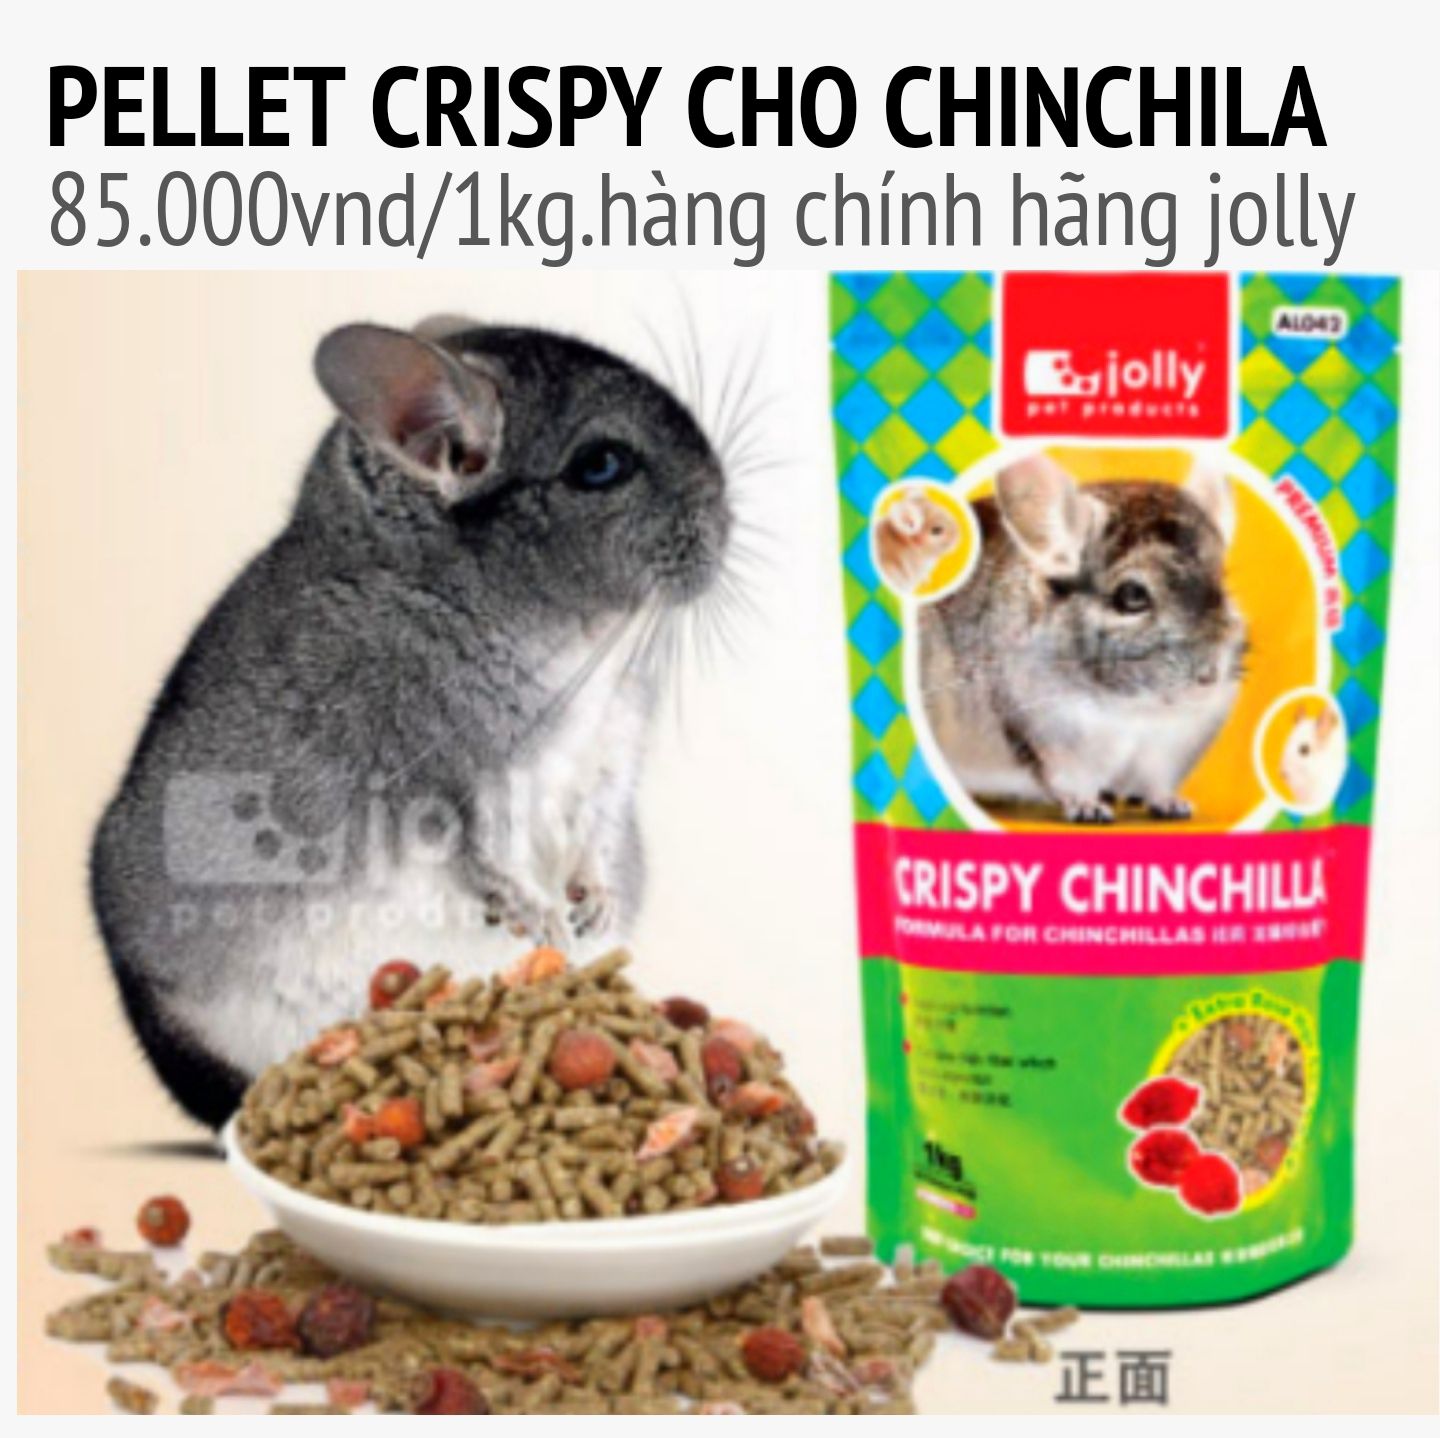 Pellet crispy cho chinchila